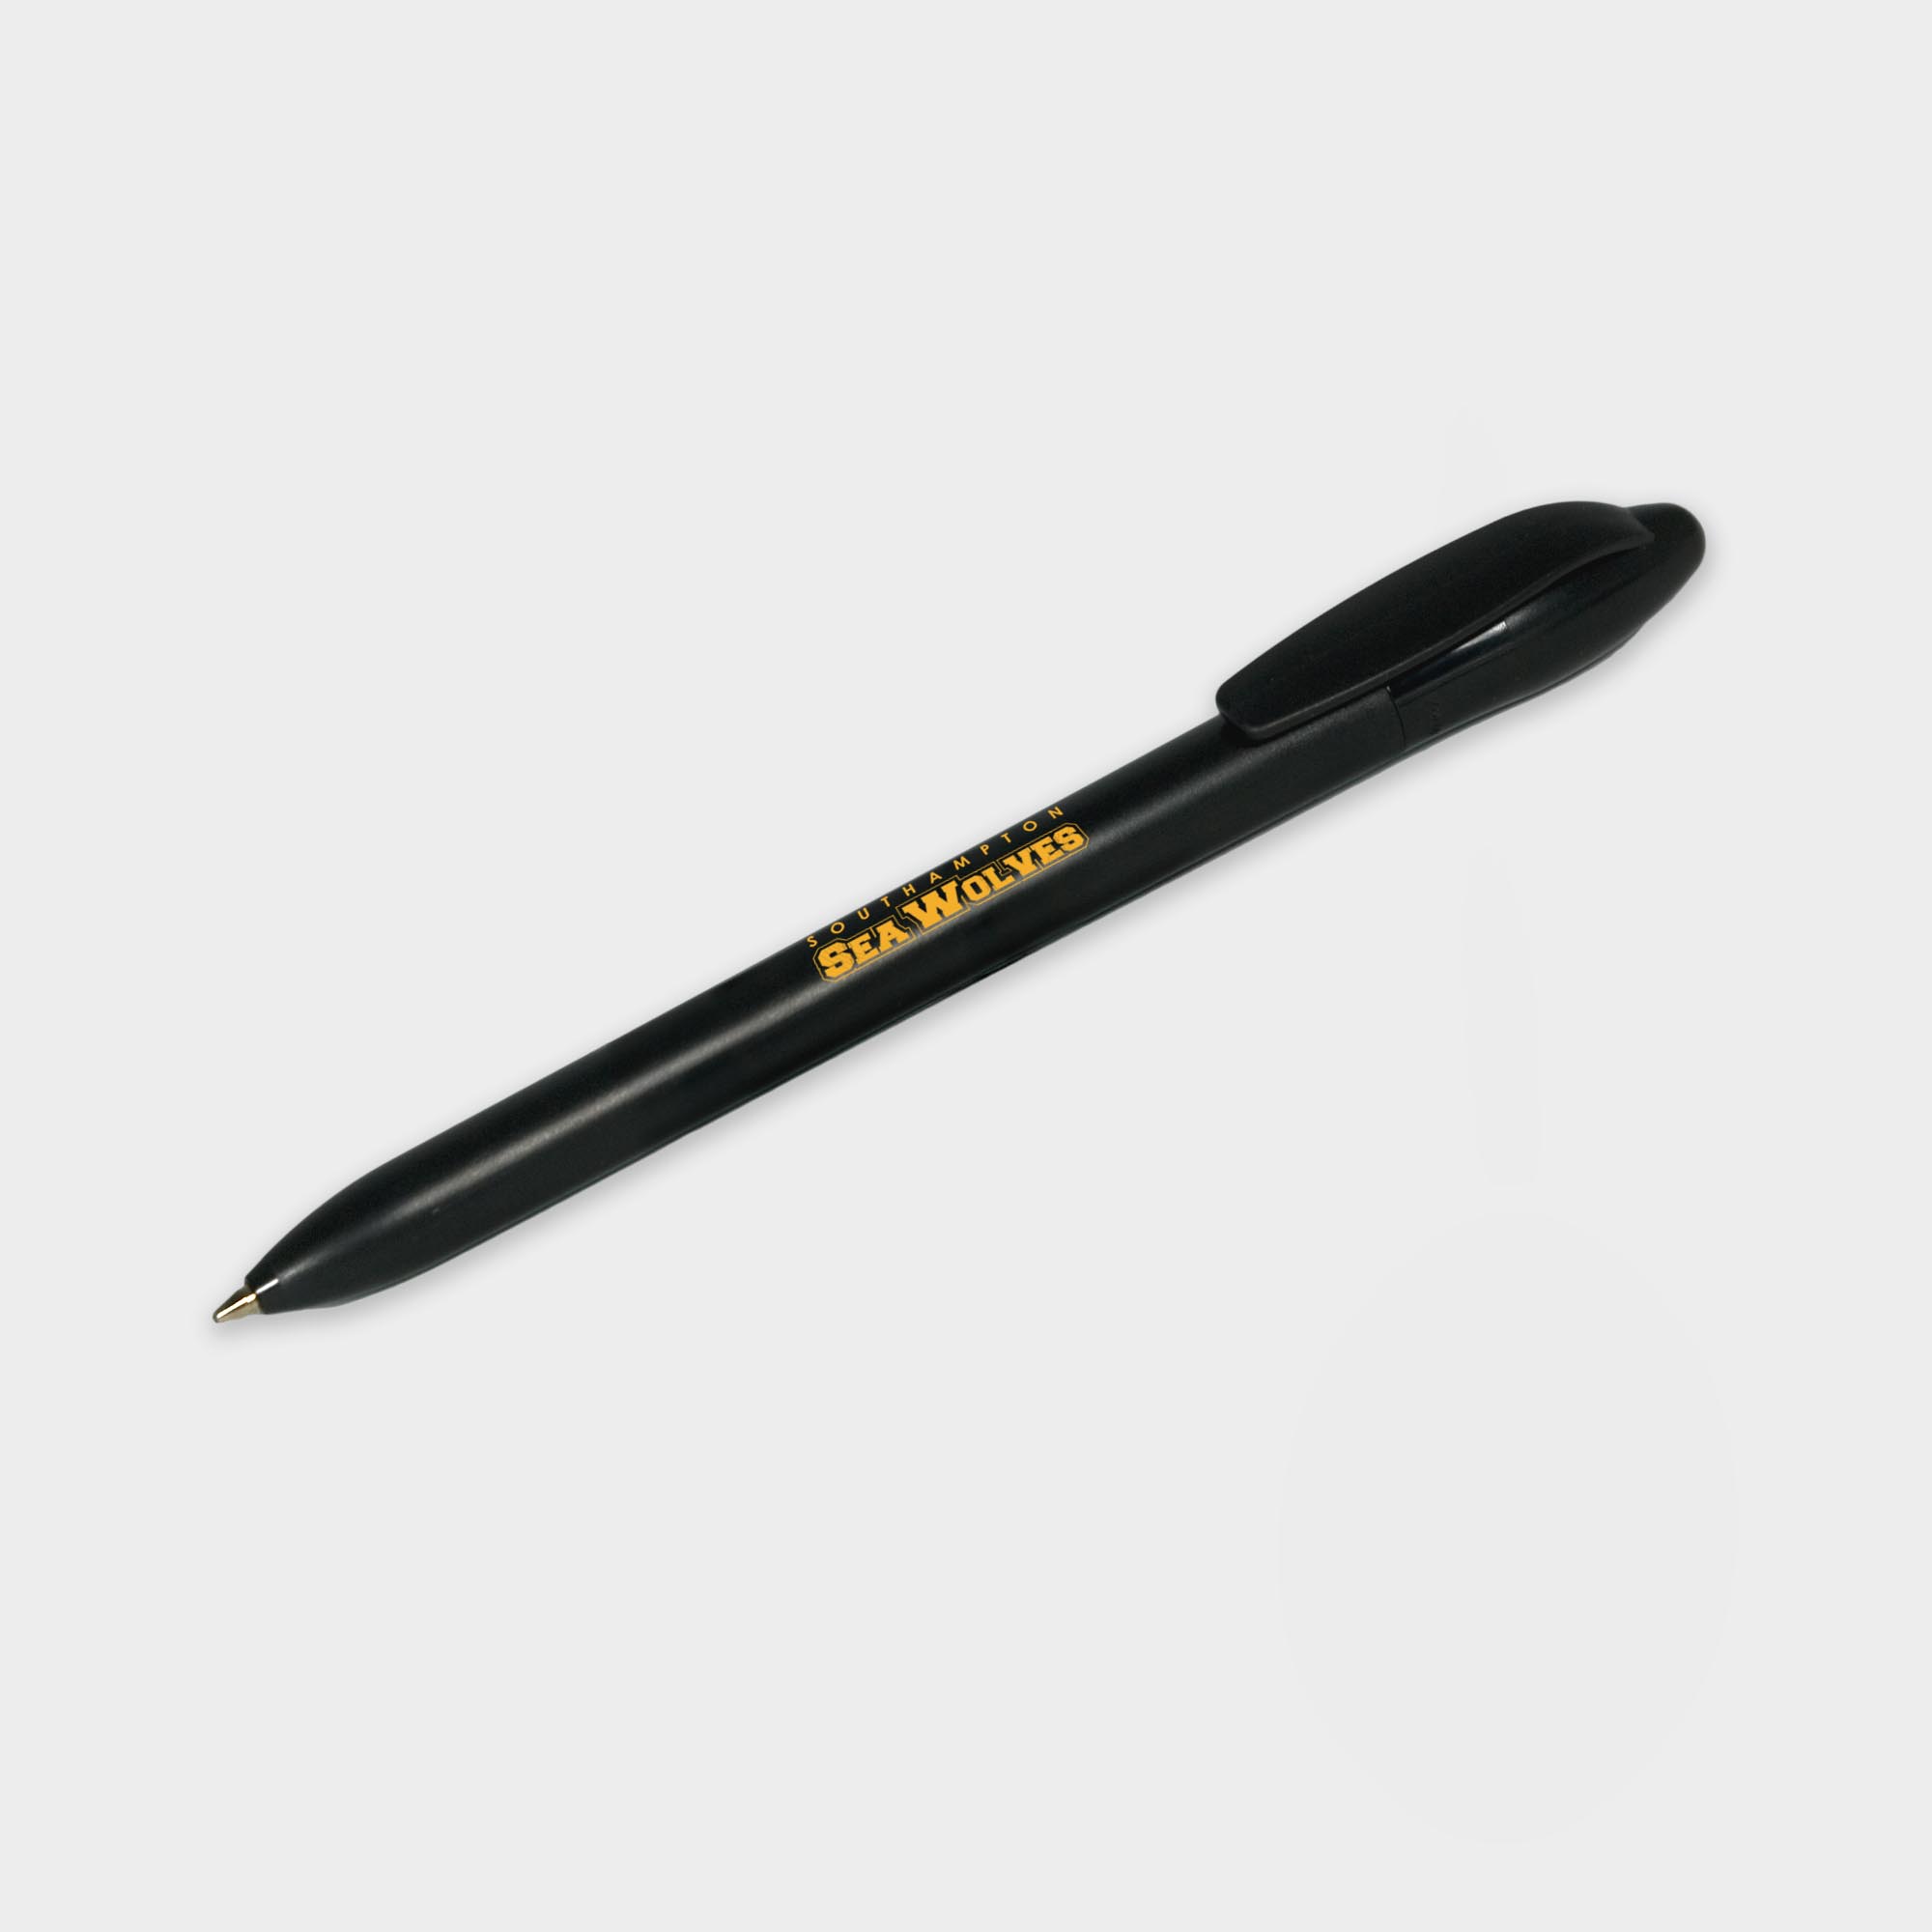 Promotional Yukon Recycled Pen